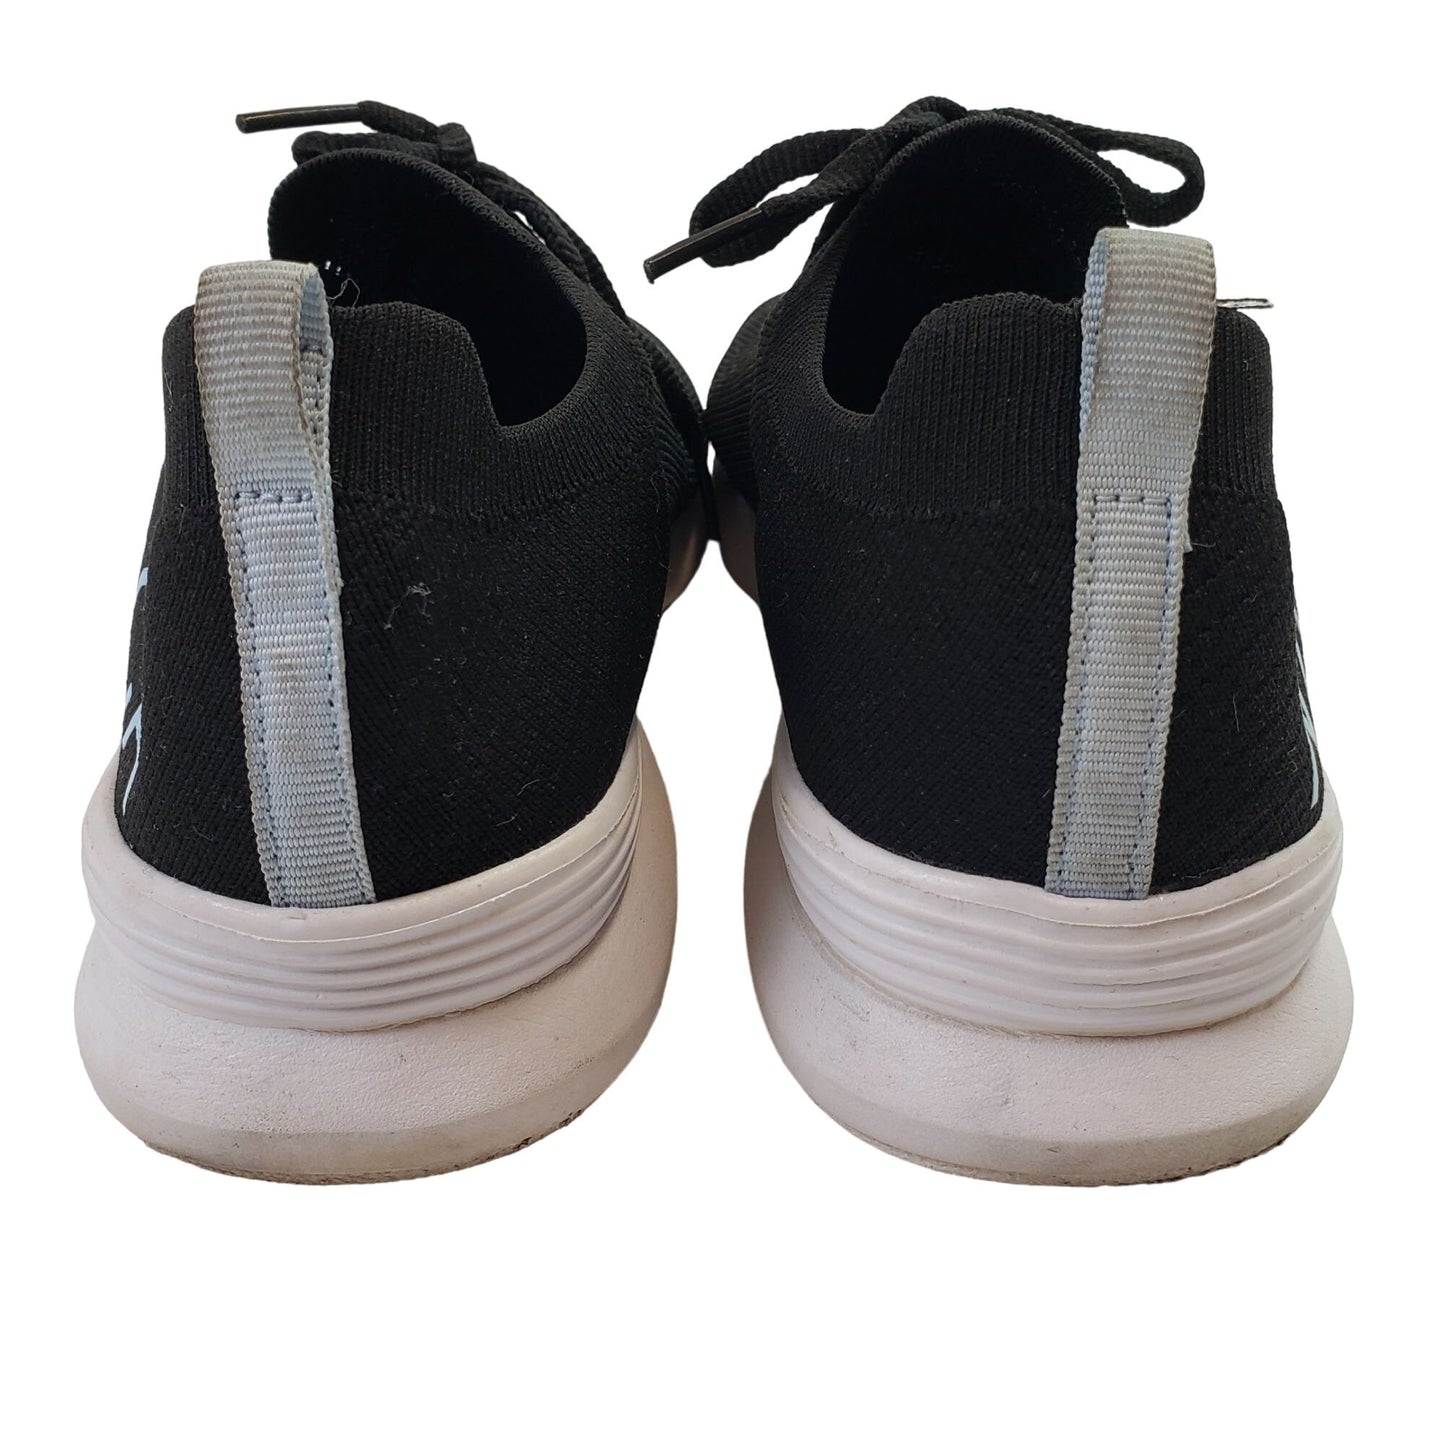 Nautica Gamila Slip-On Sneakers Size 10